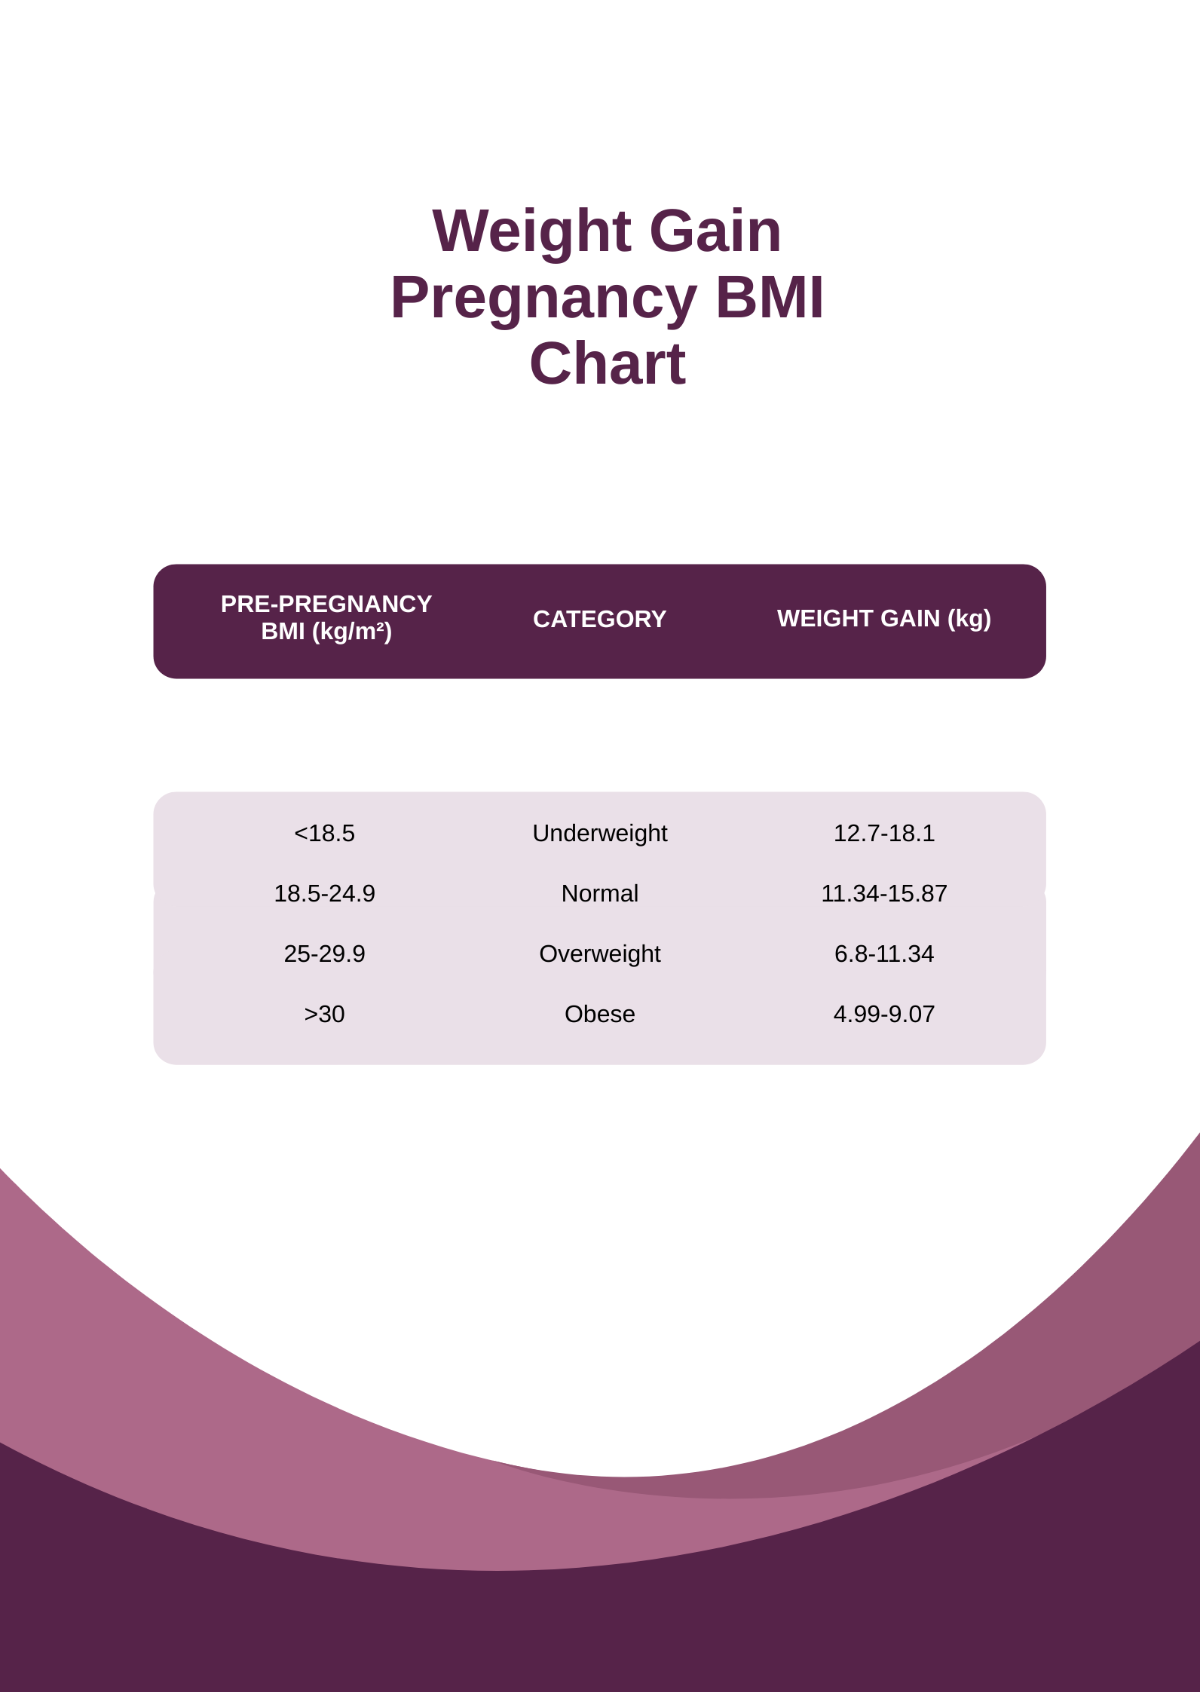 Weight Gain Pregnancy BMI Chart Template